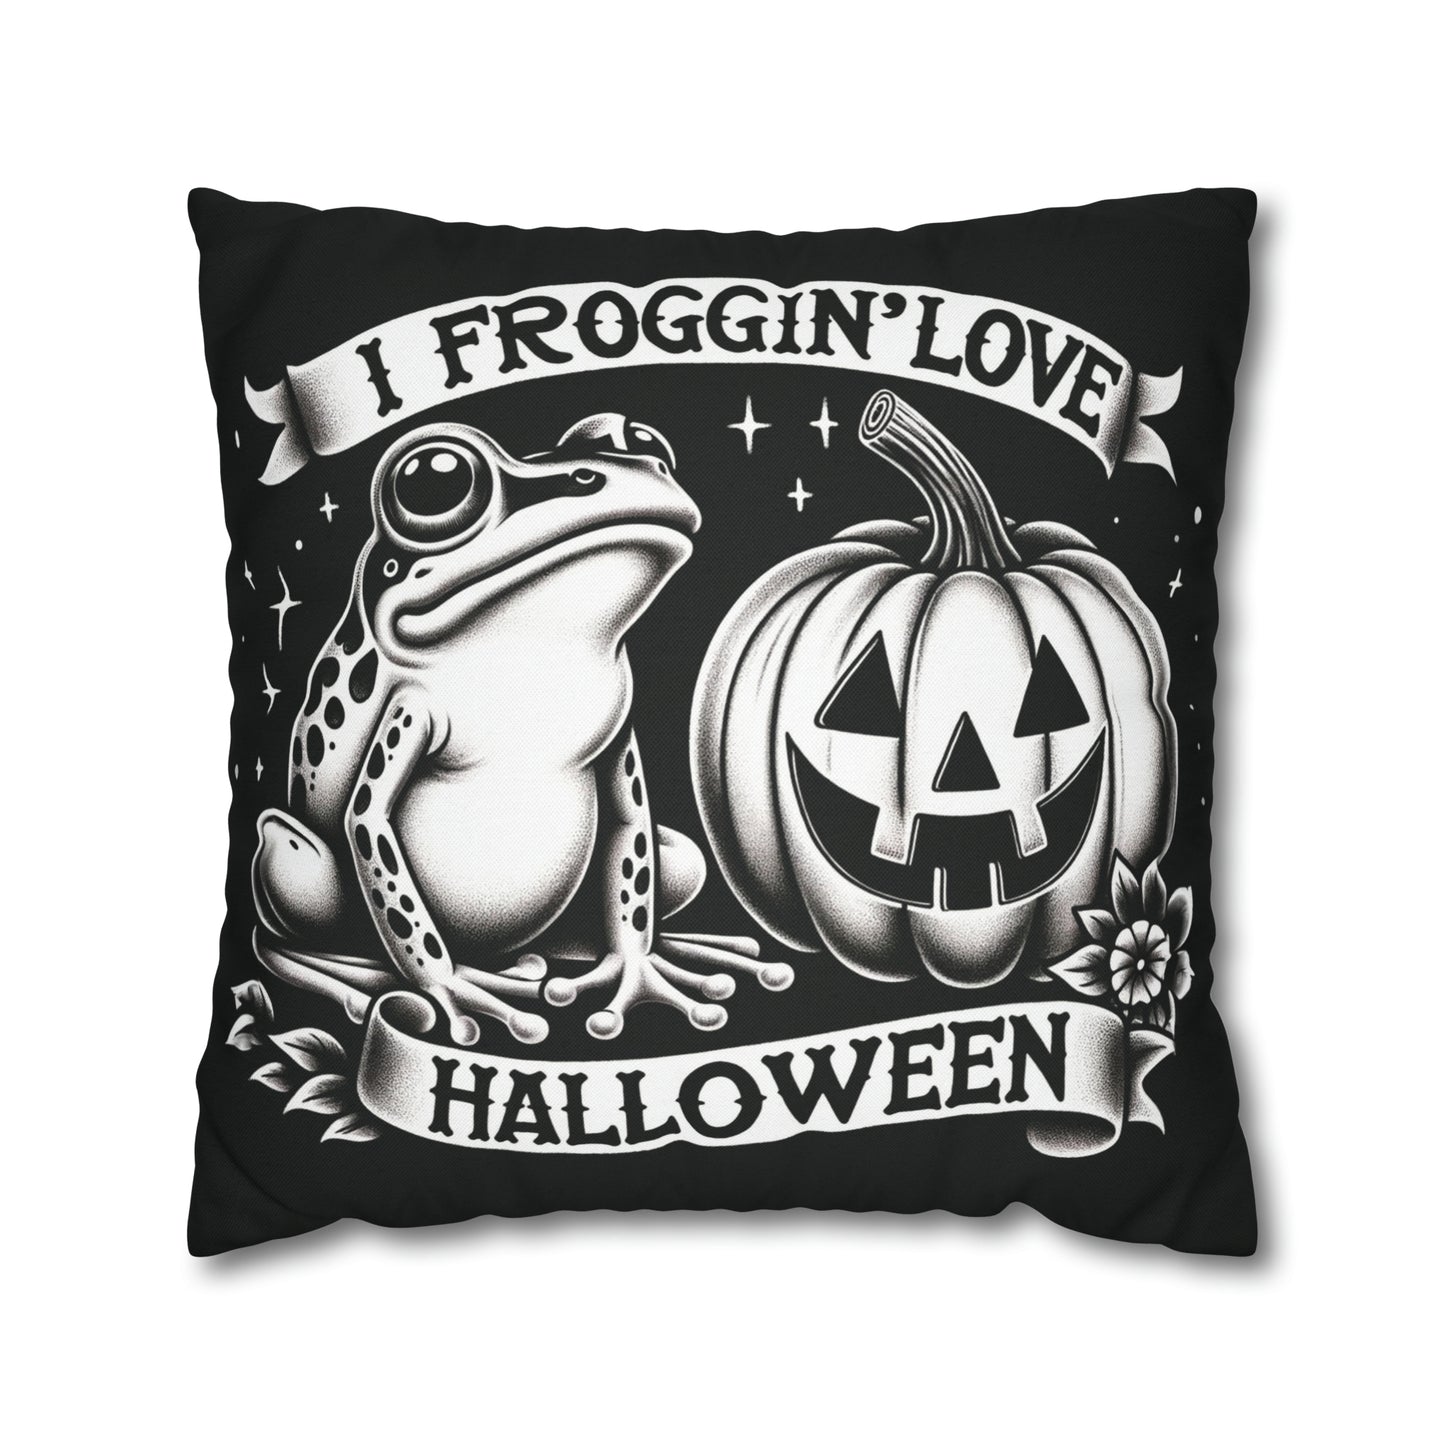 I Froggin' Love Halloween Spun Polyester  Pillow Case